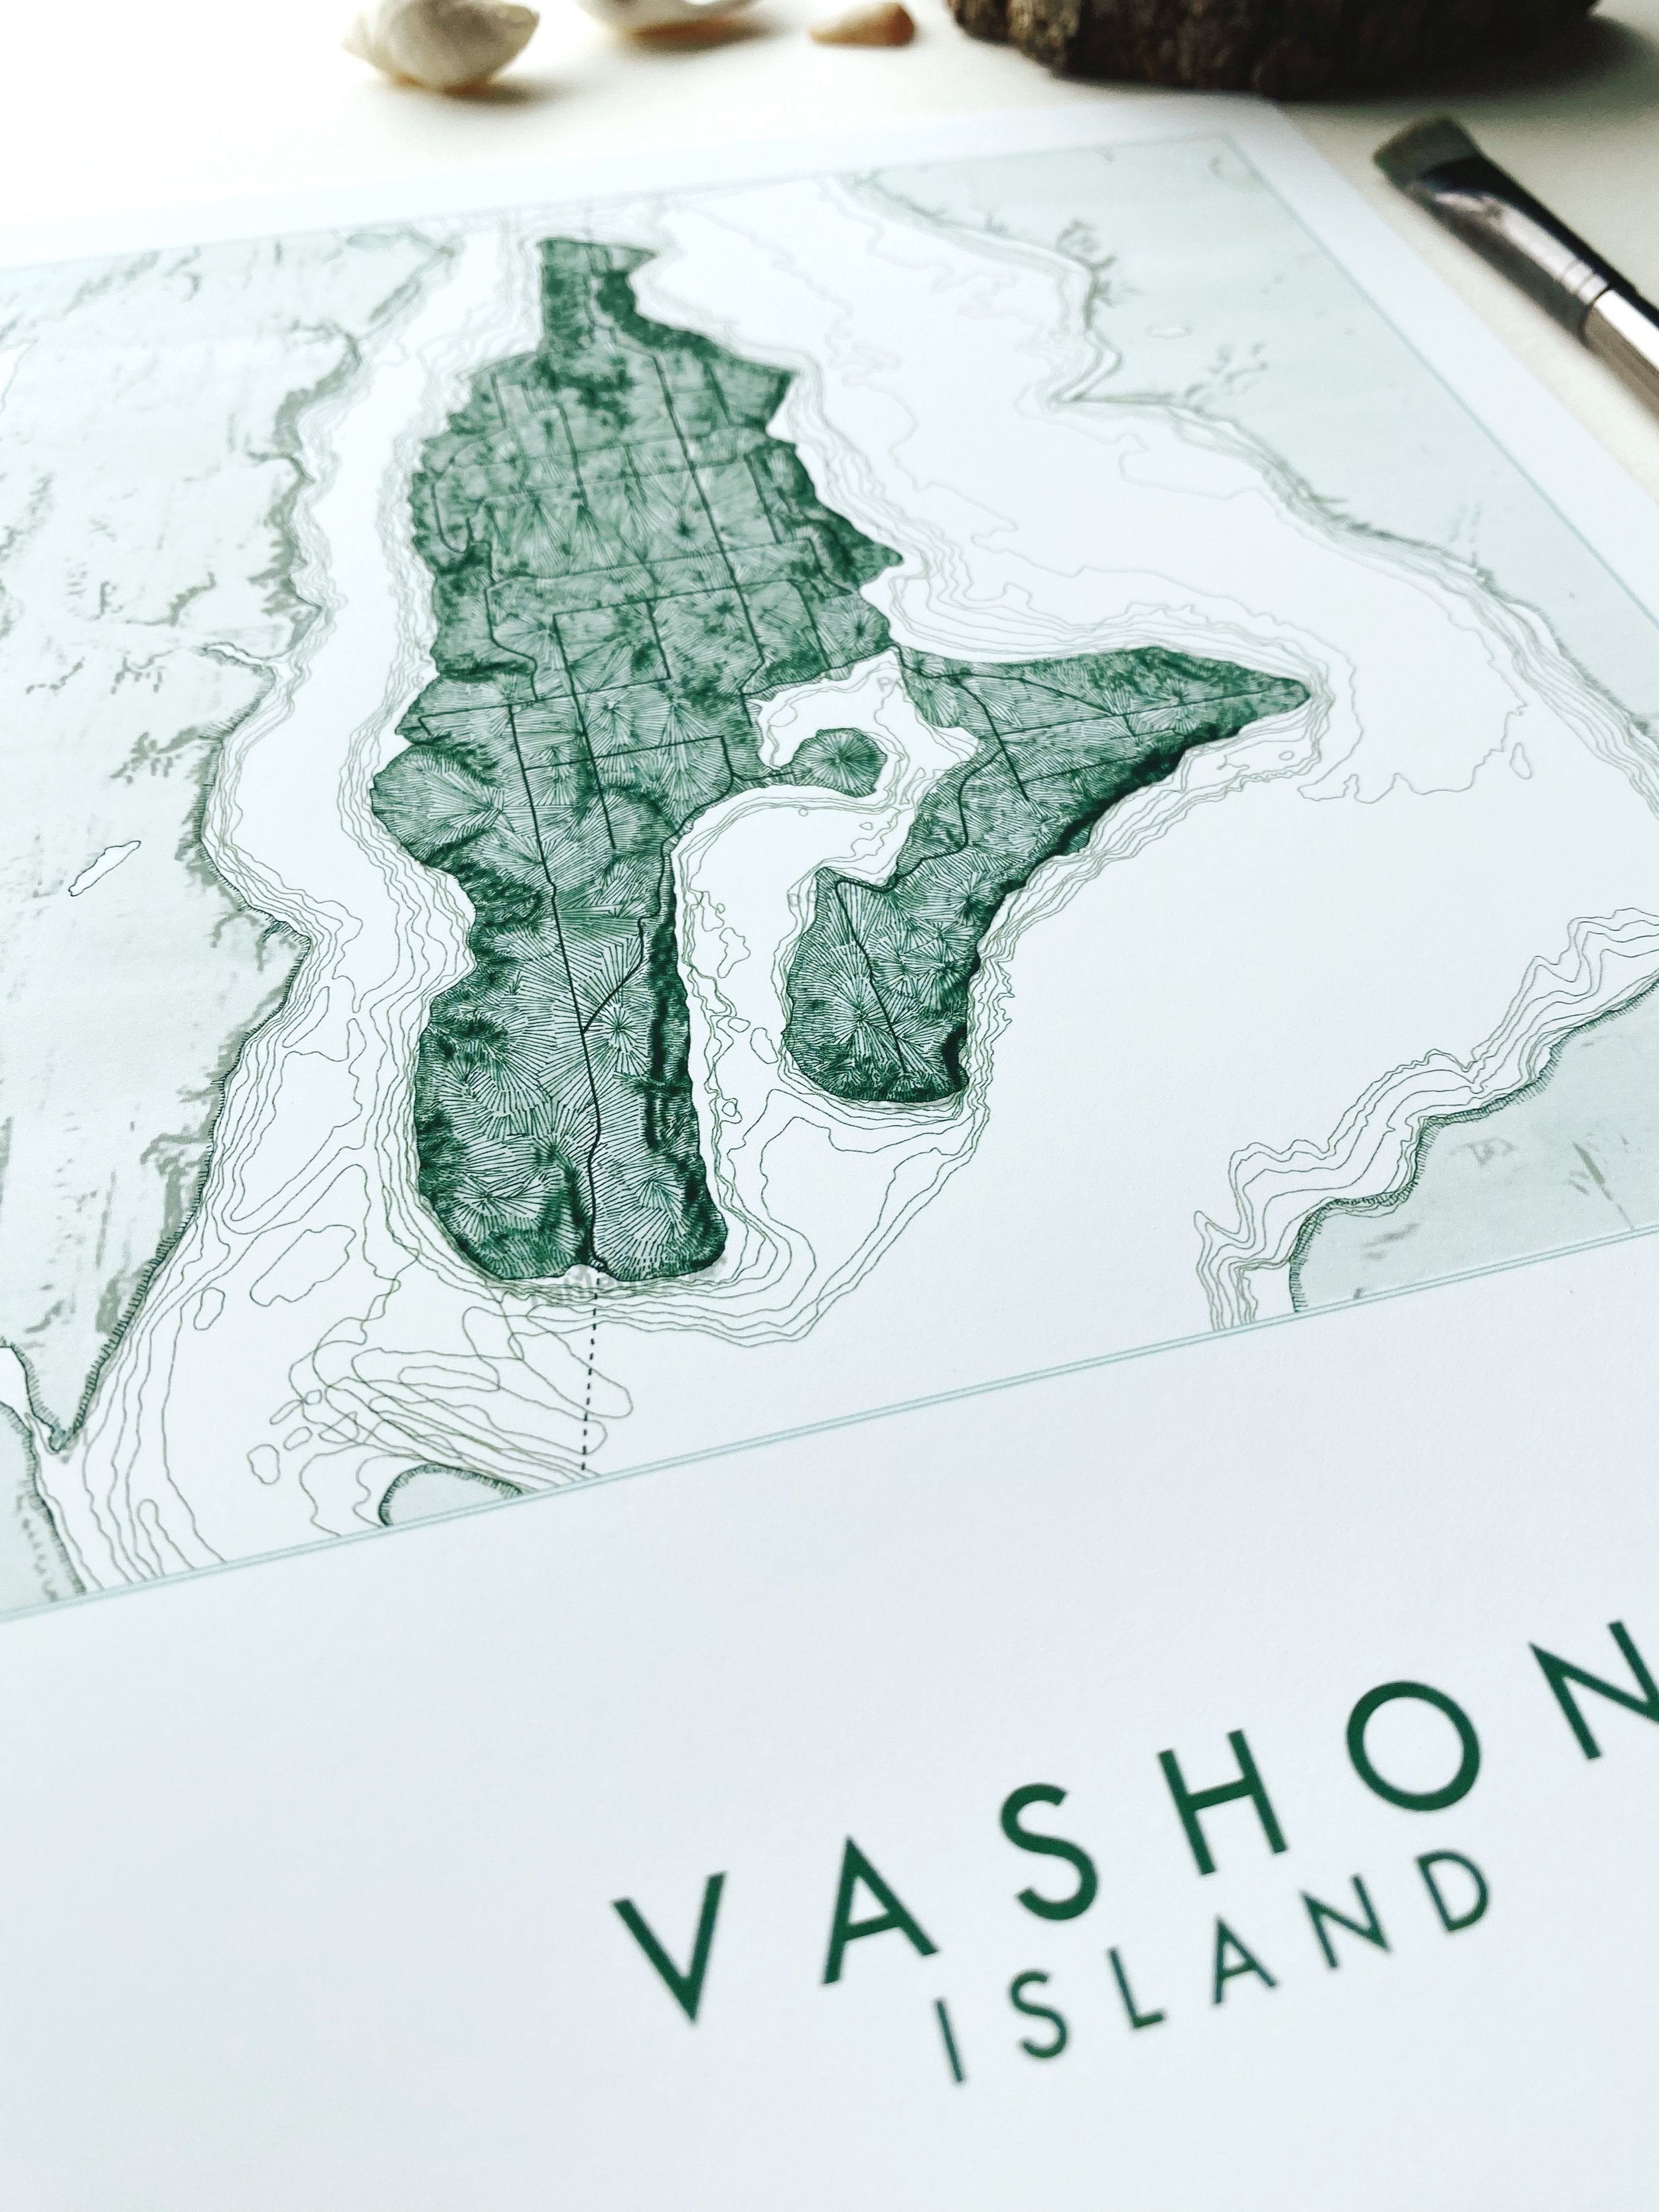 VASHON Land + Water Map Drawing: PRINT